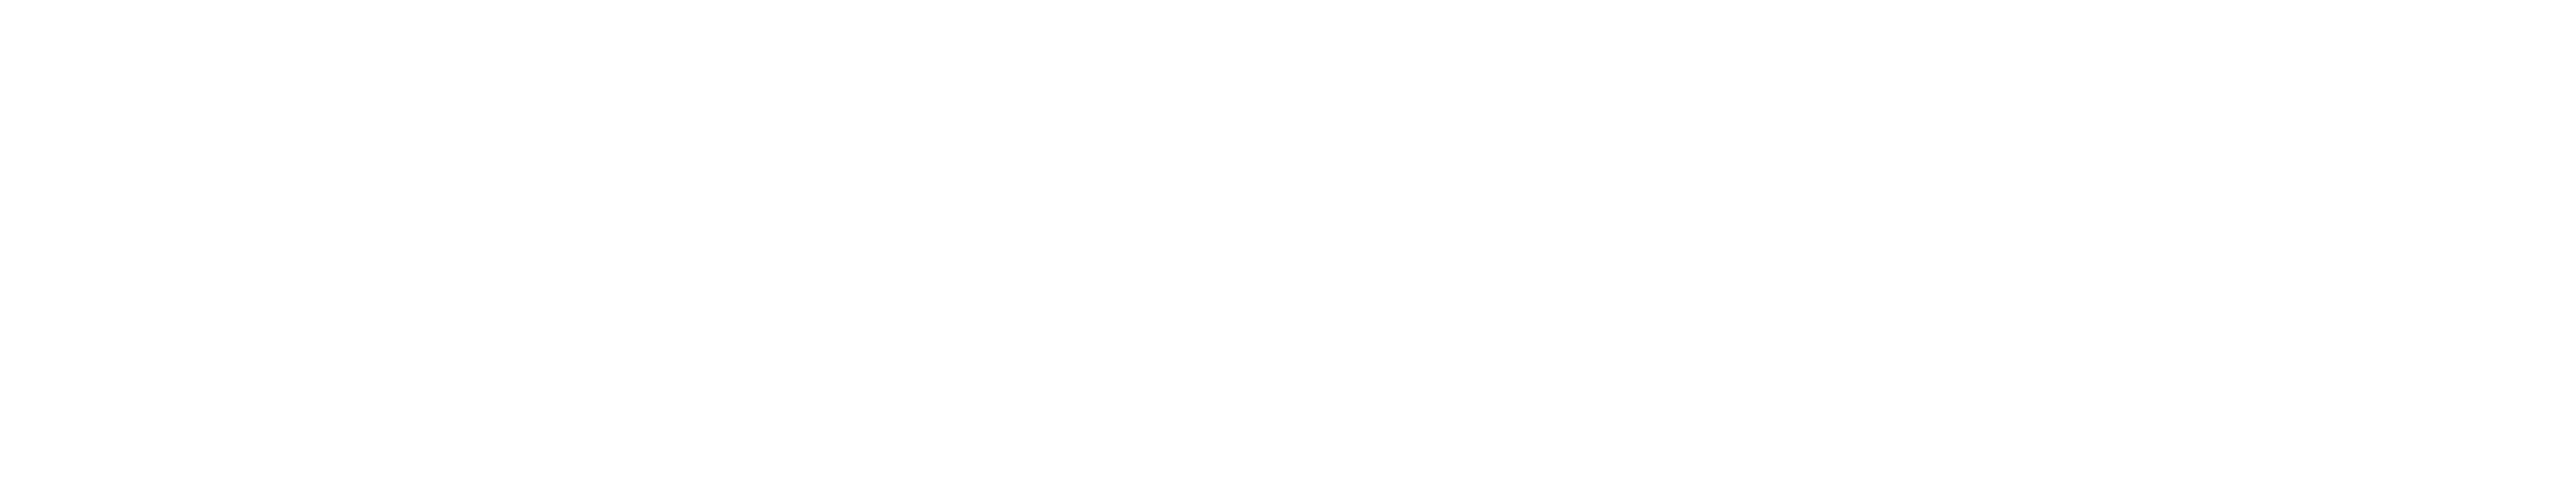 GM GM Hotel Sunway Metro logo